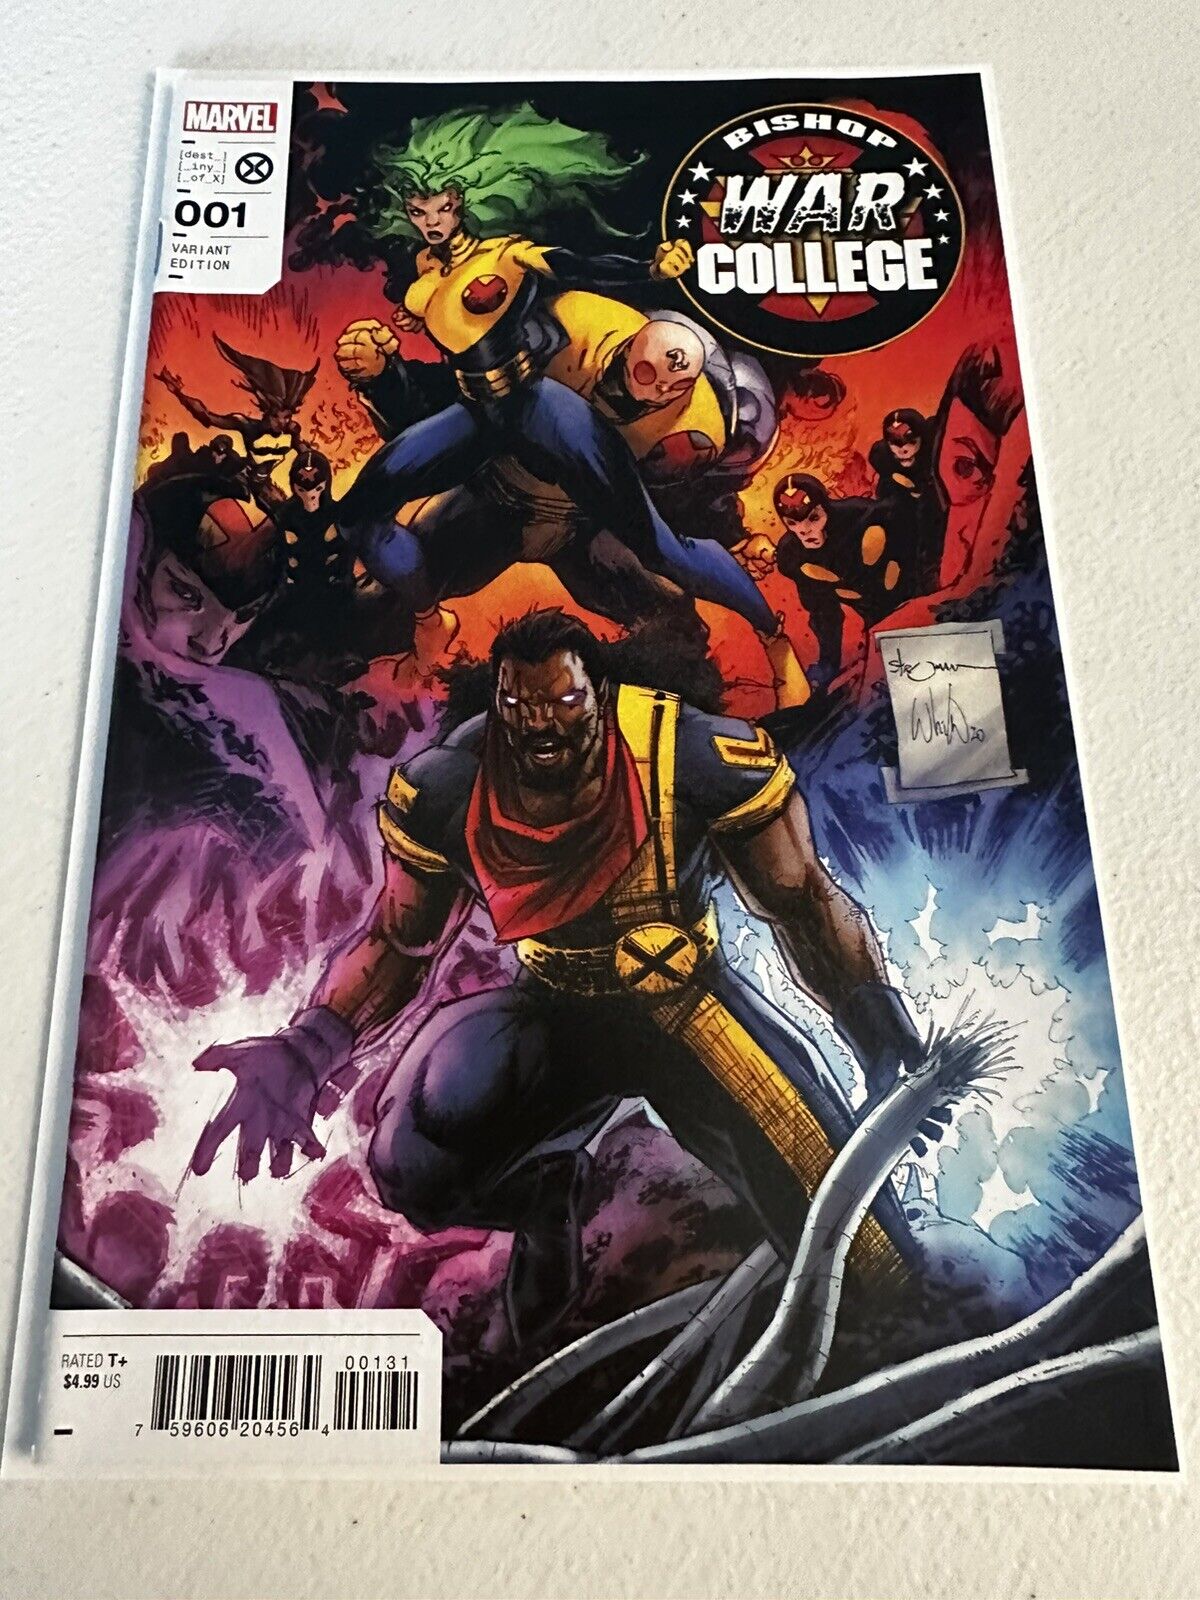 Marvel Comics X-Men BISHOP WAR COLLEGE #1 STROMAN 1:50 Hidden Gem Variant Cover